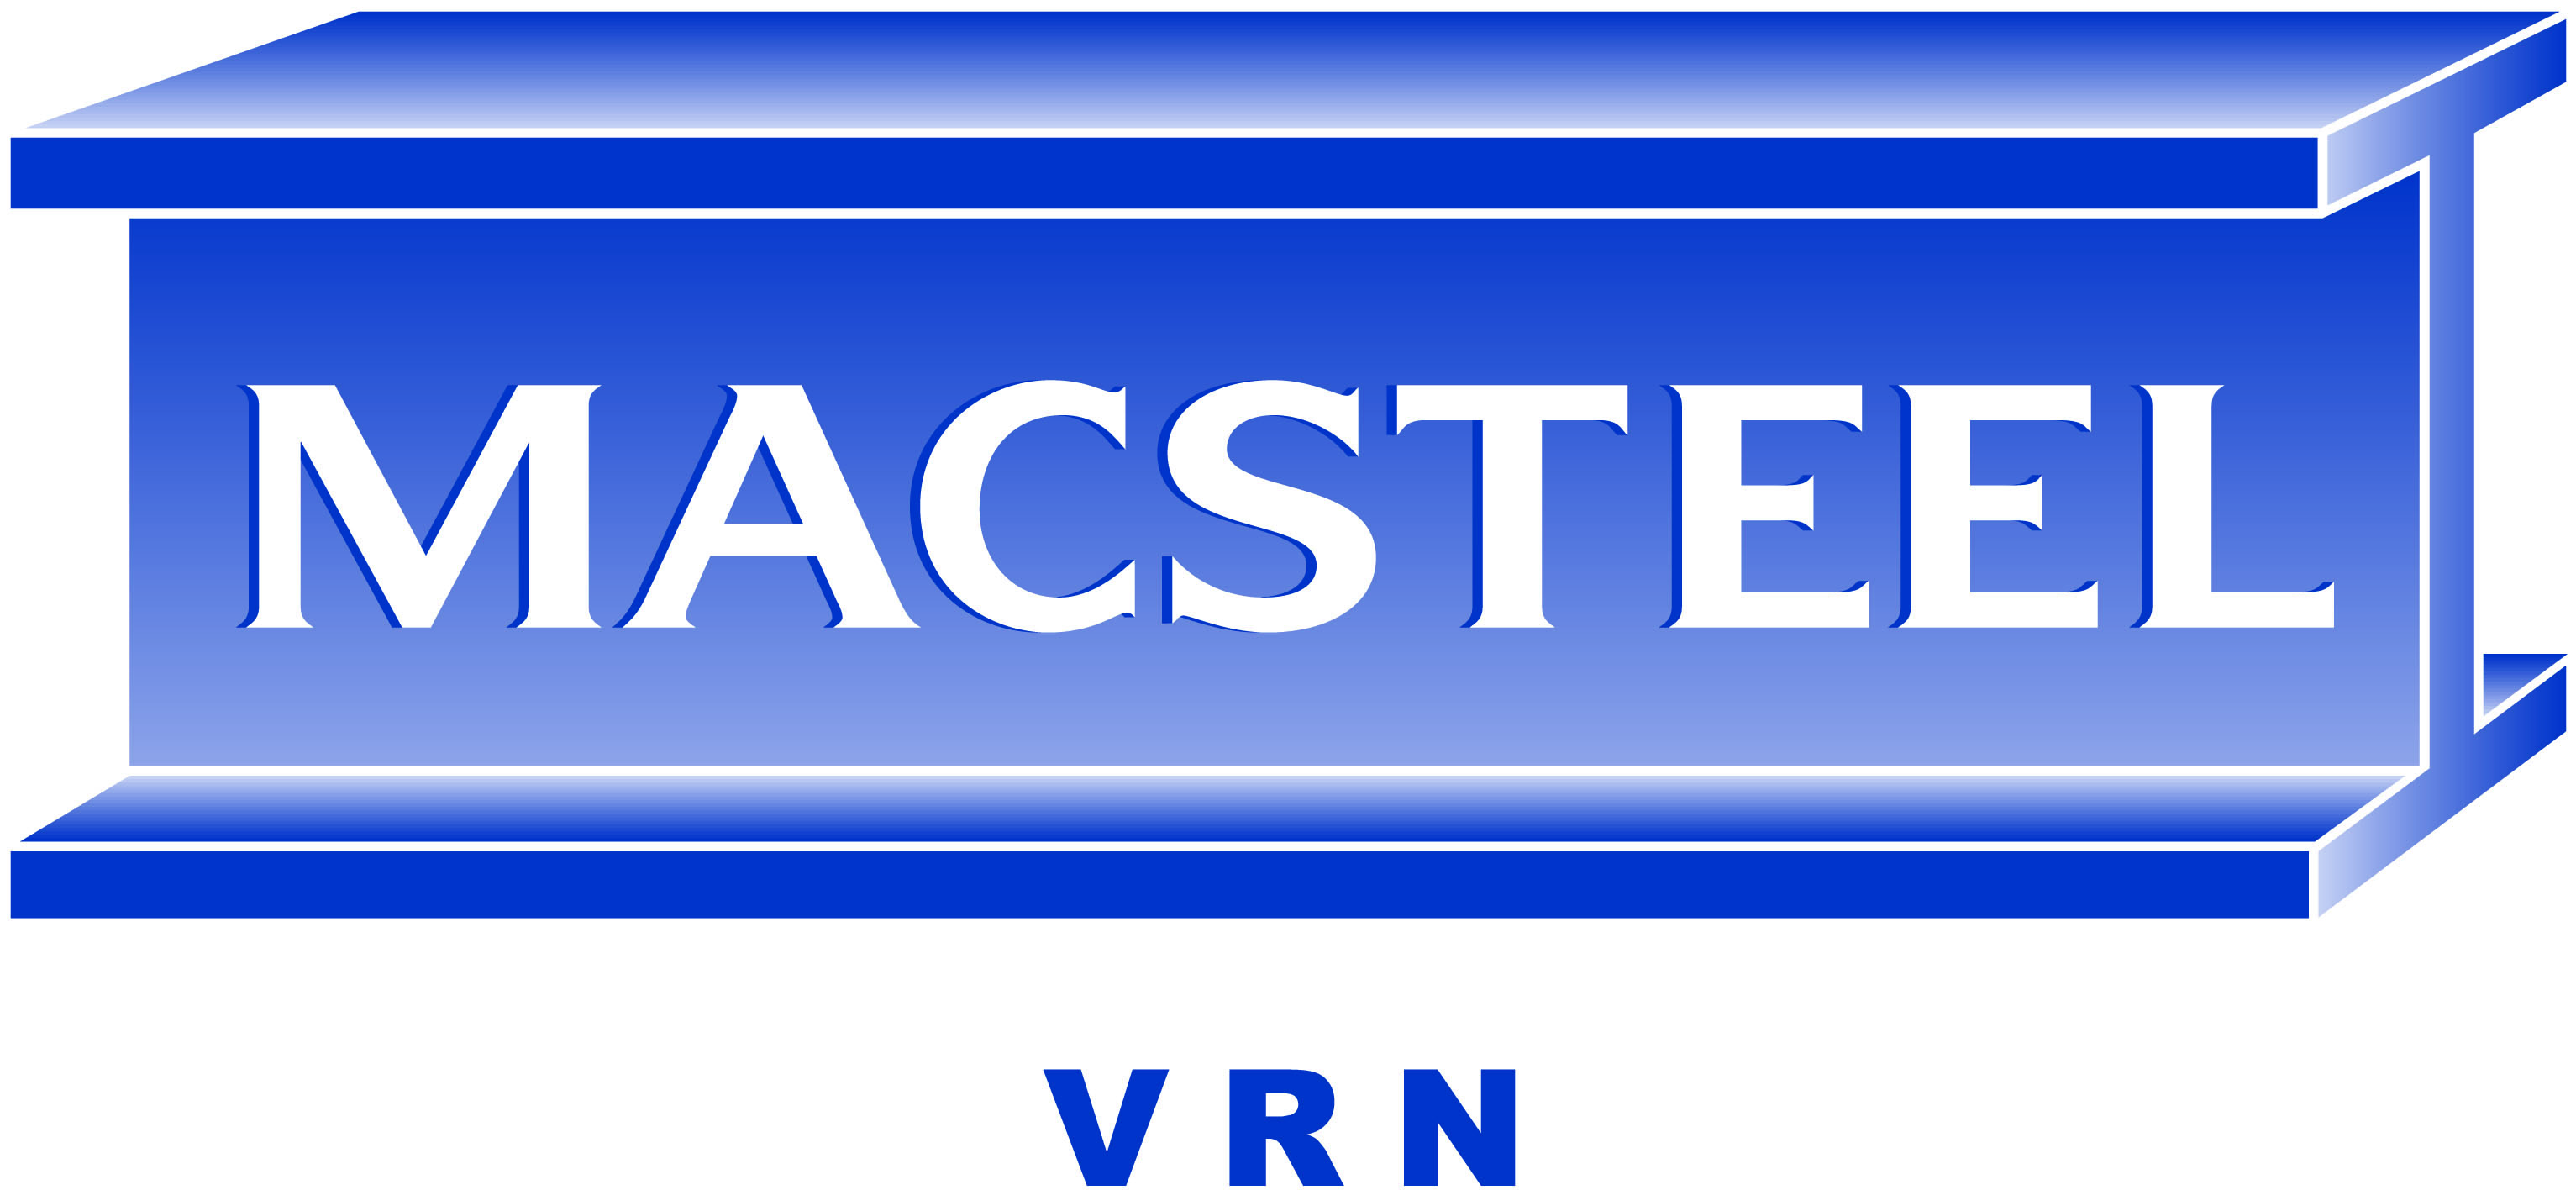 Macsteel Vrn - Durban logo